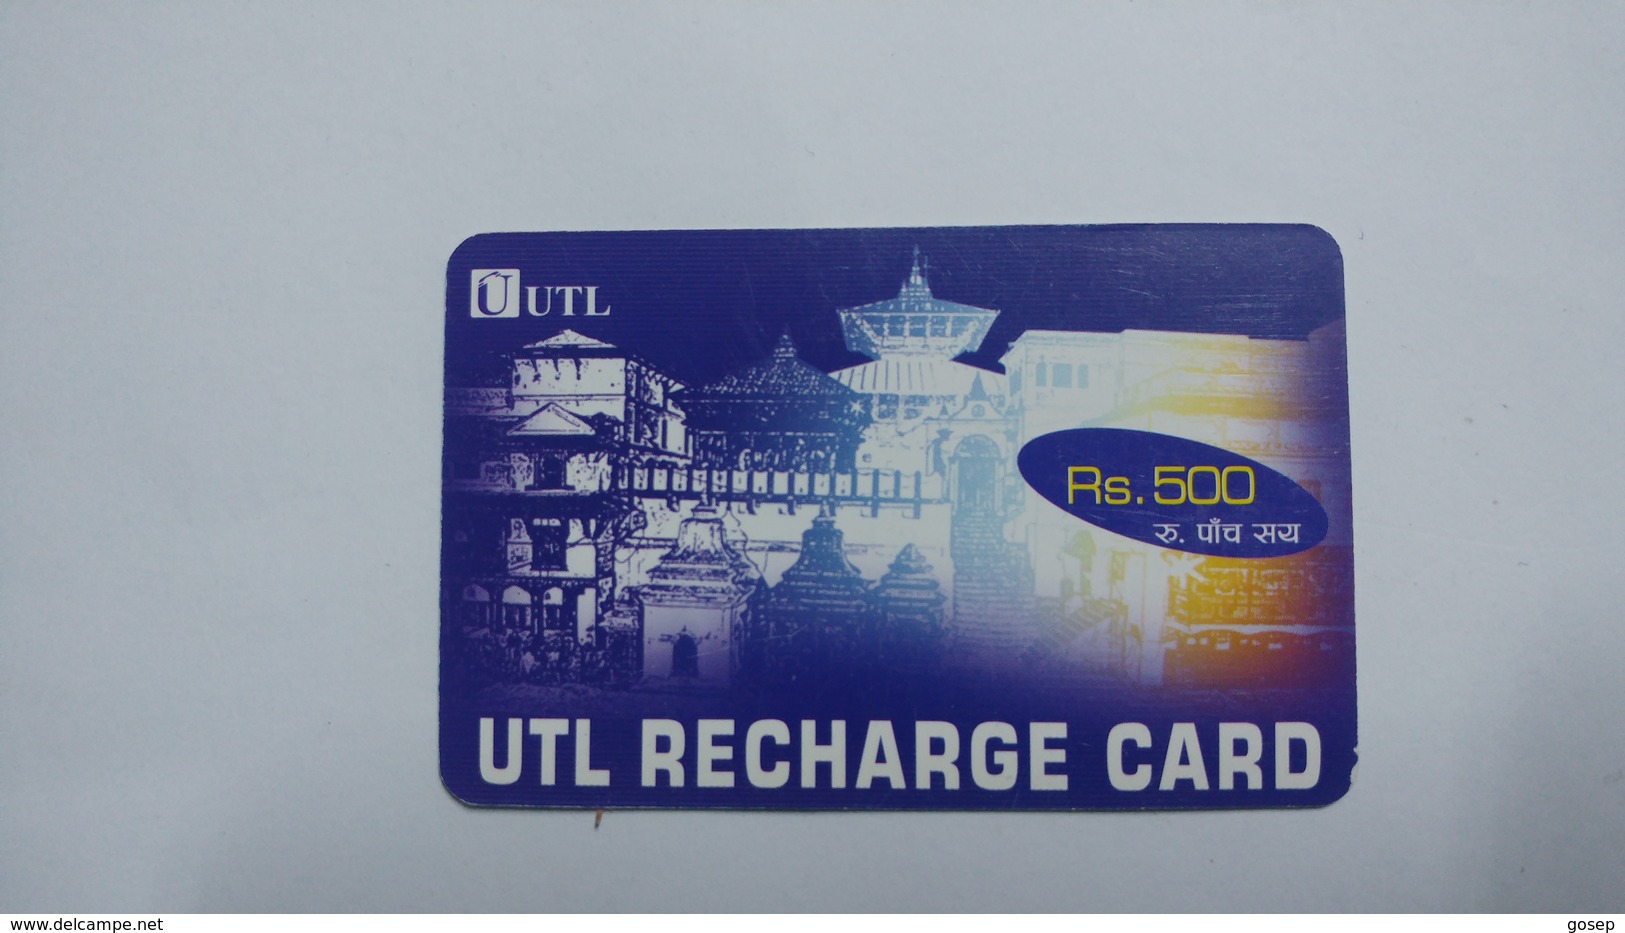 Nepal-utlcustomer(rs.500)-(28)-(10896936398093)-()-used Card - Népal